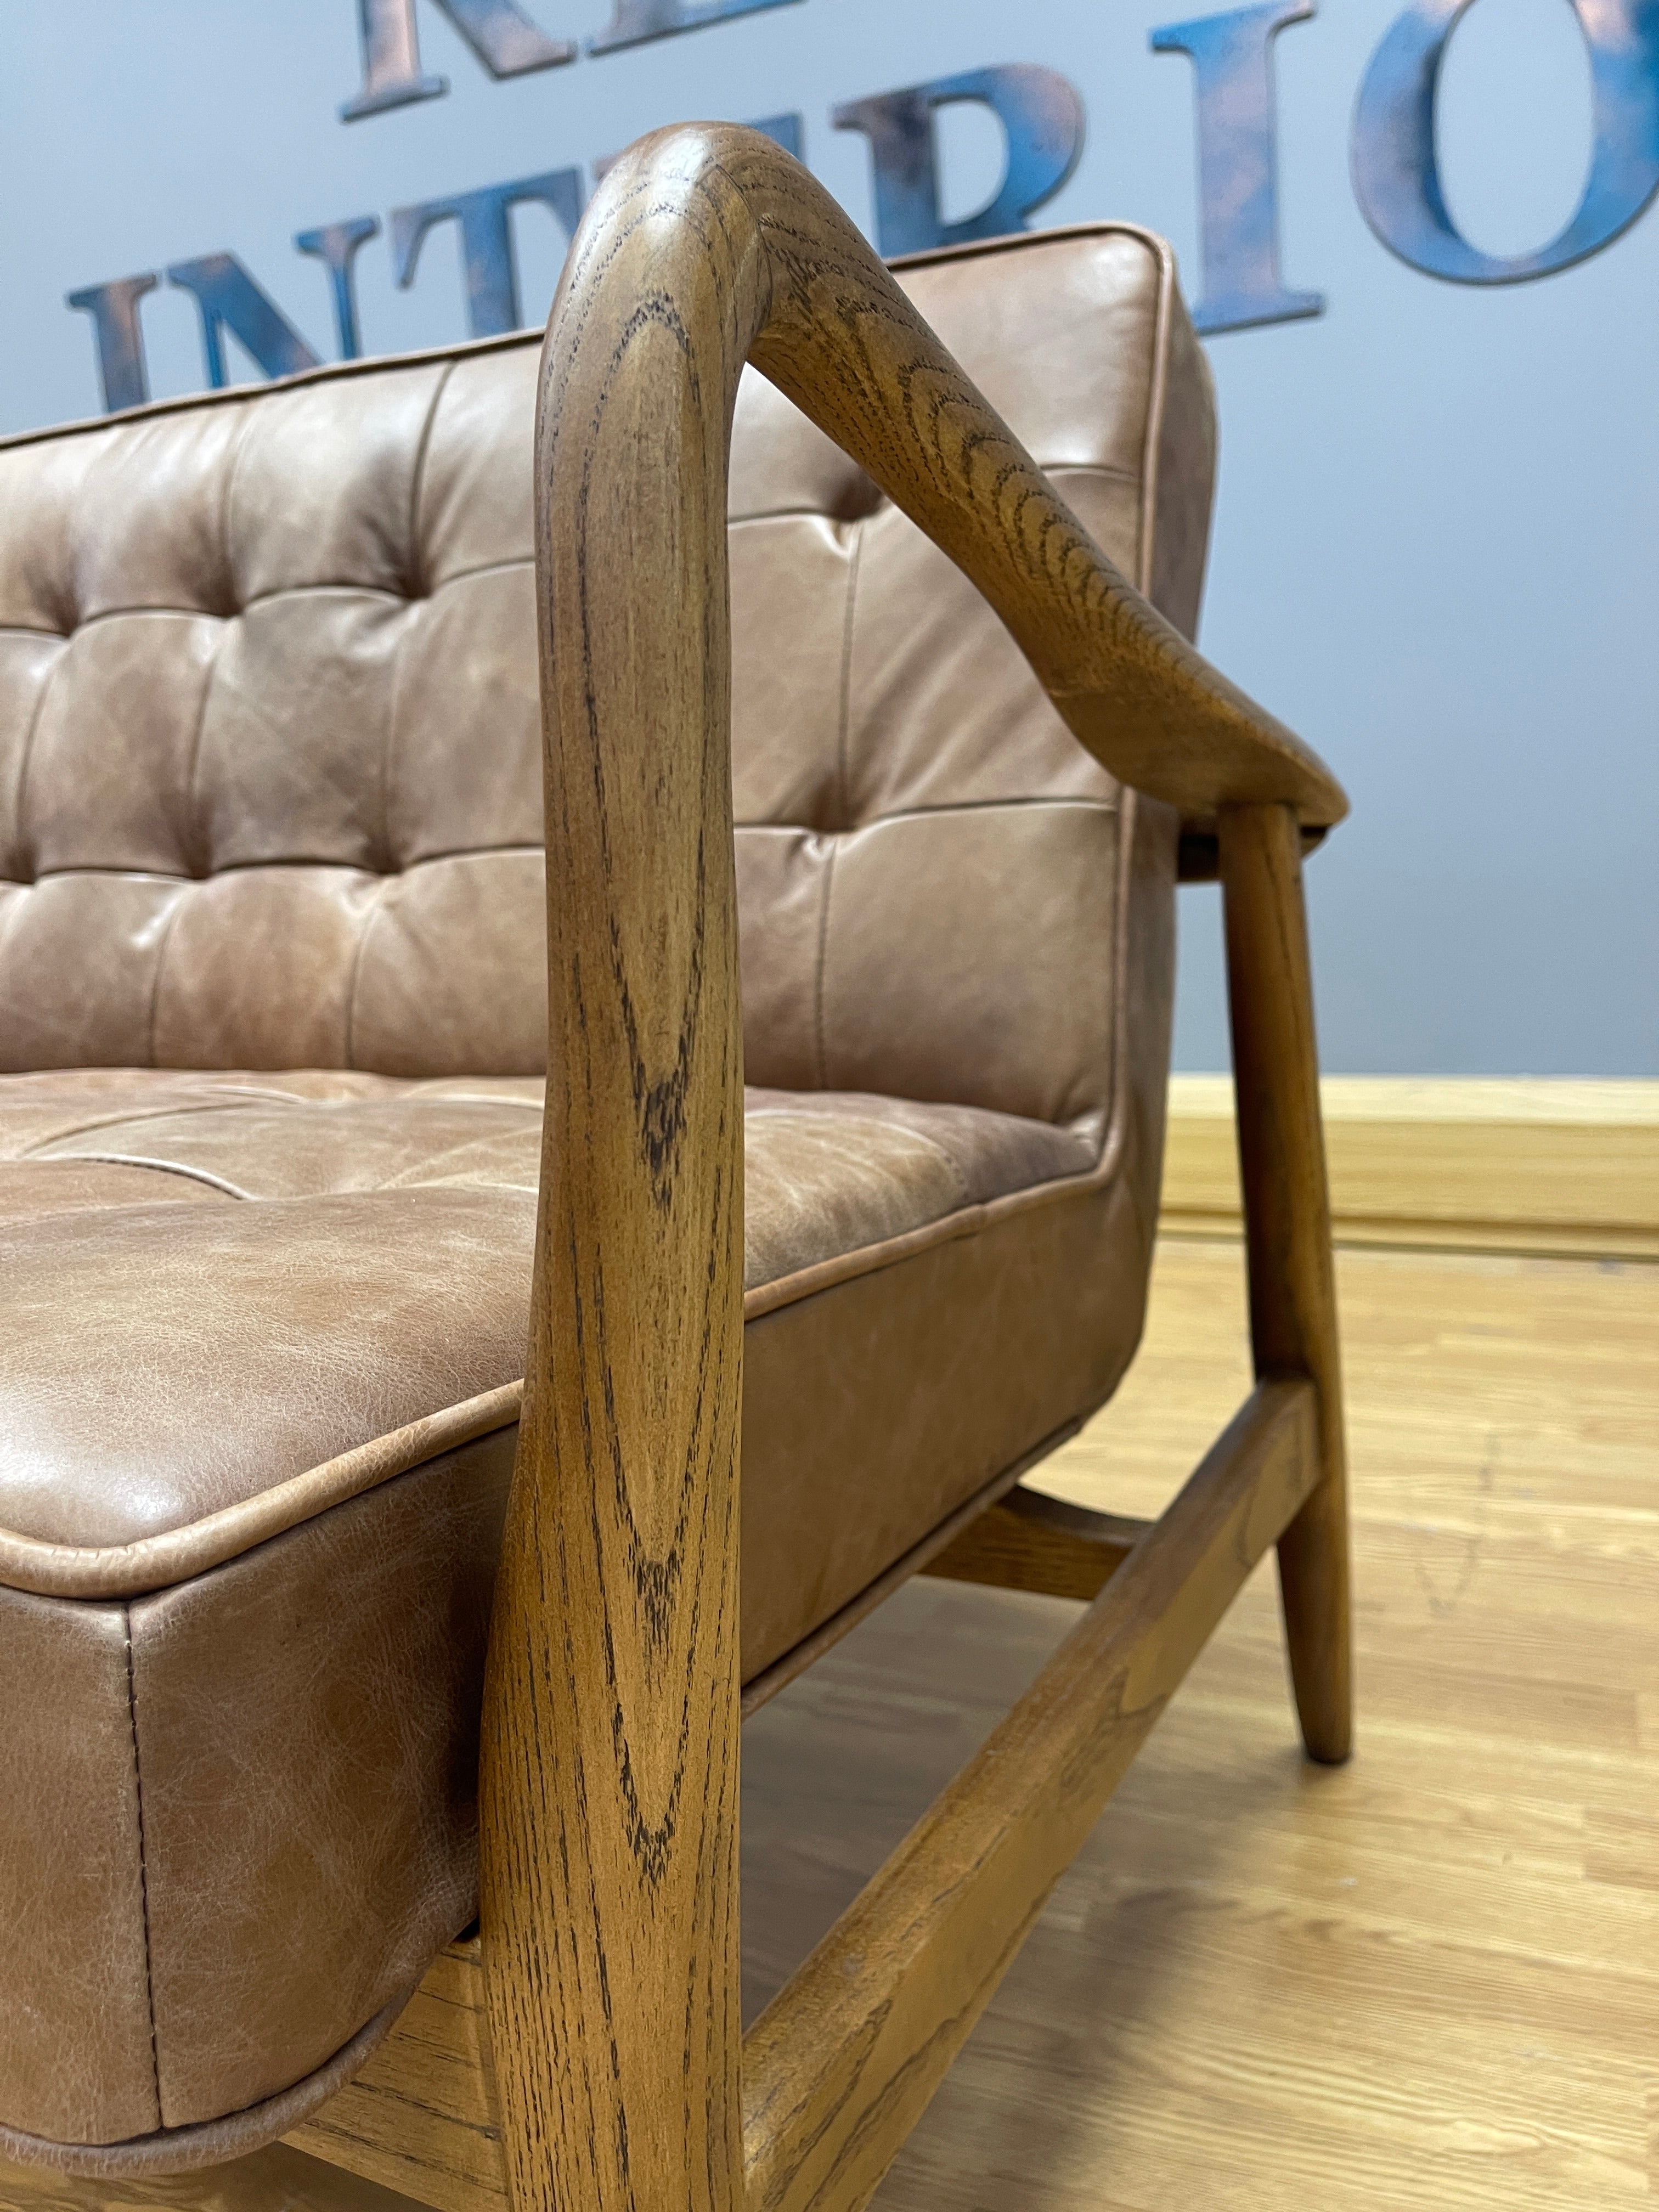 VINTAGE SOFA CO CALDER 2 seater sofa with vintage tan brown leather & polished walnut wood frame